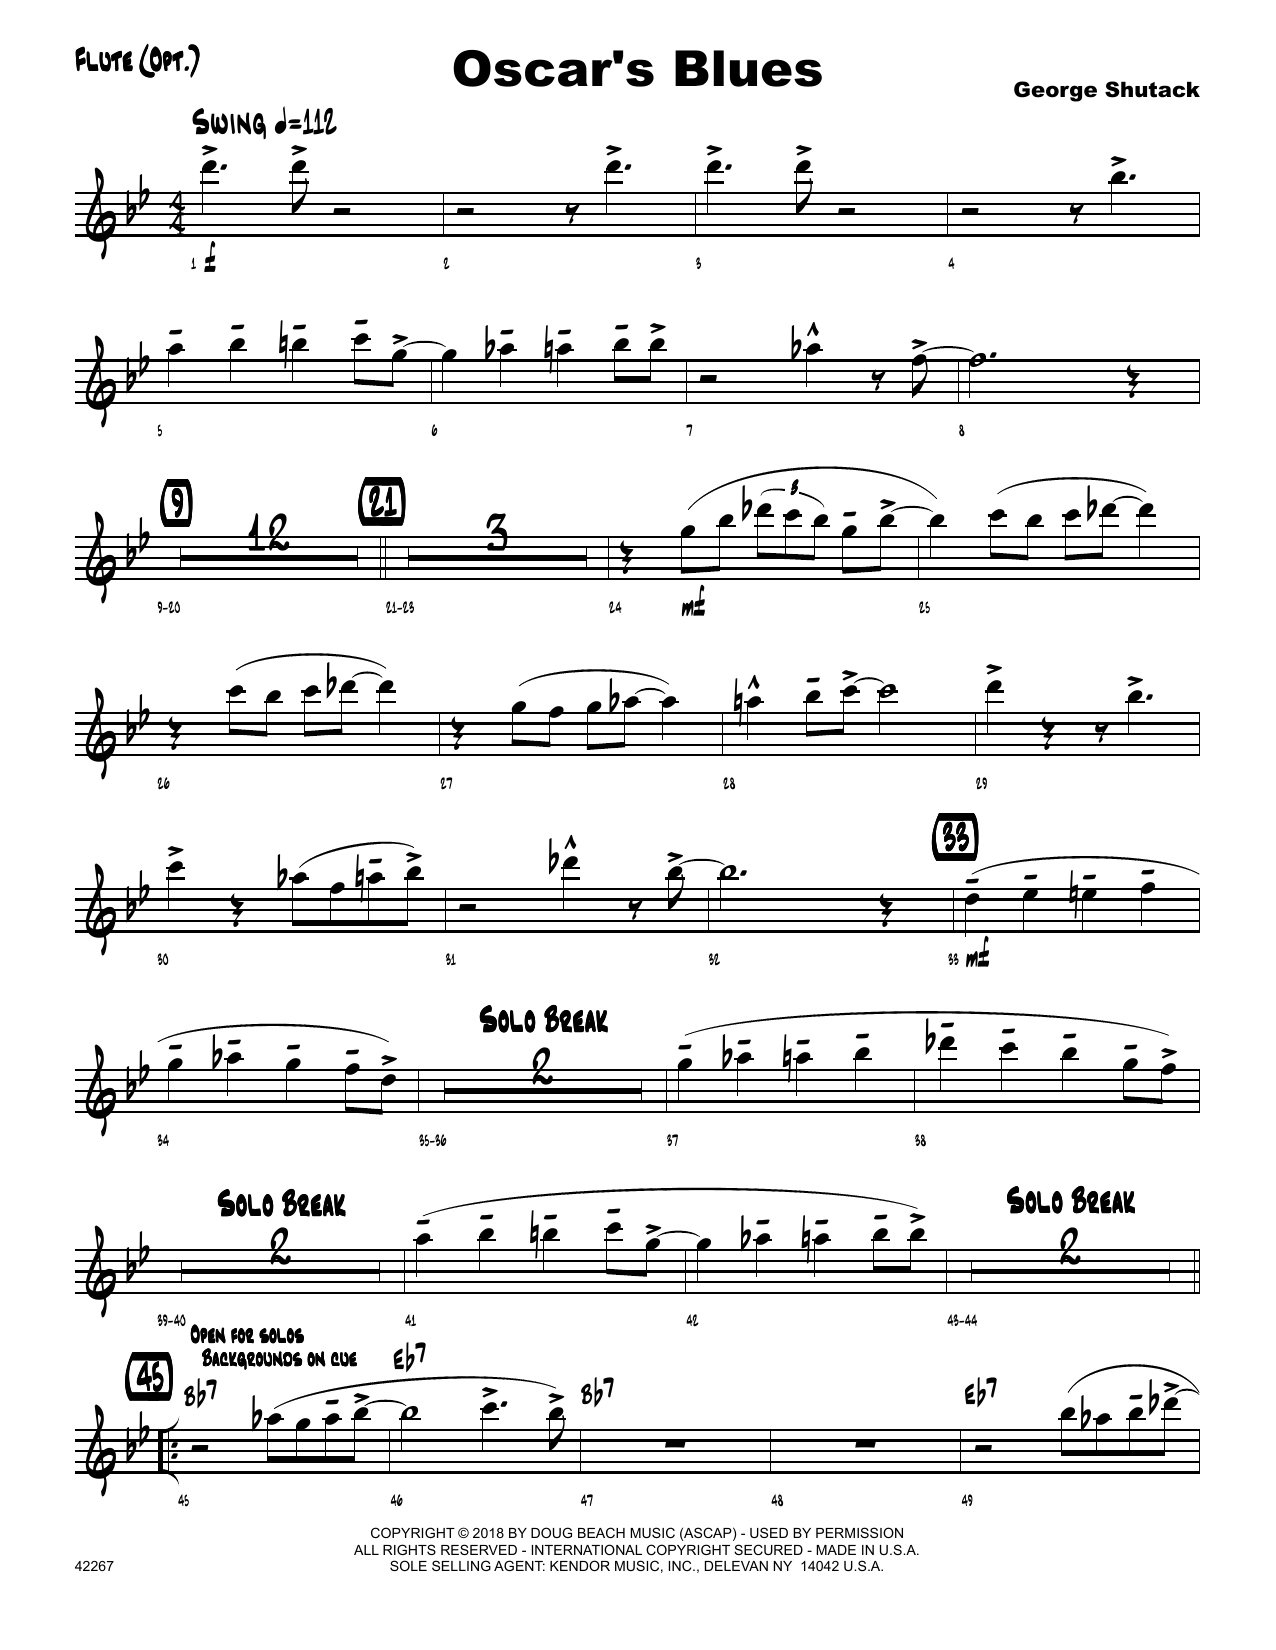 Download George Shutack Oscar's Blues - Flute Sheet Music